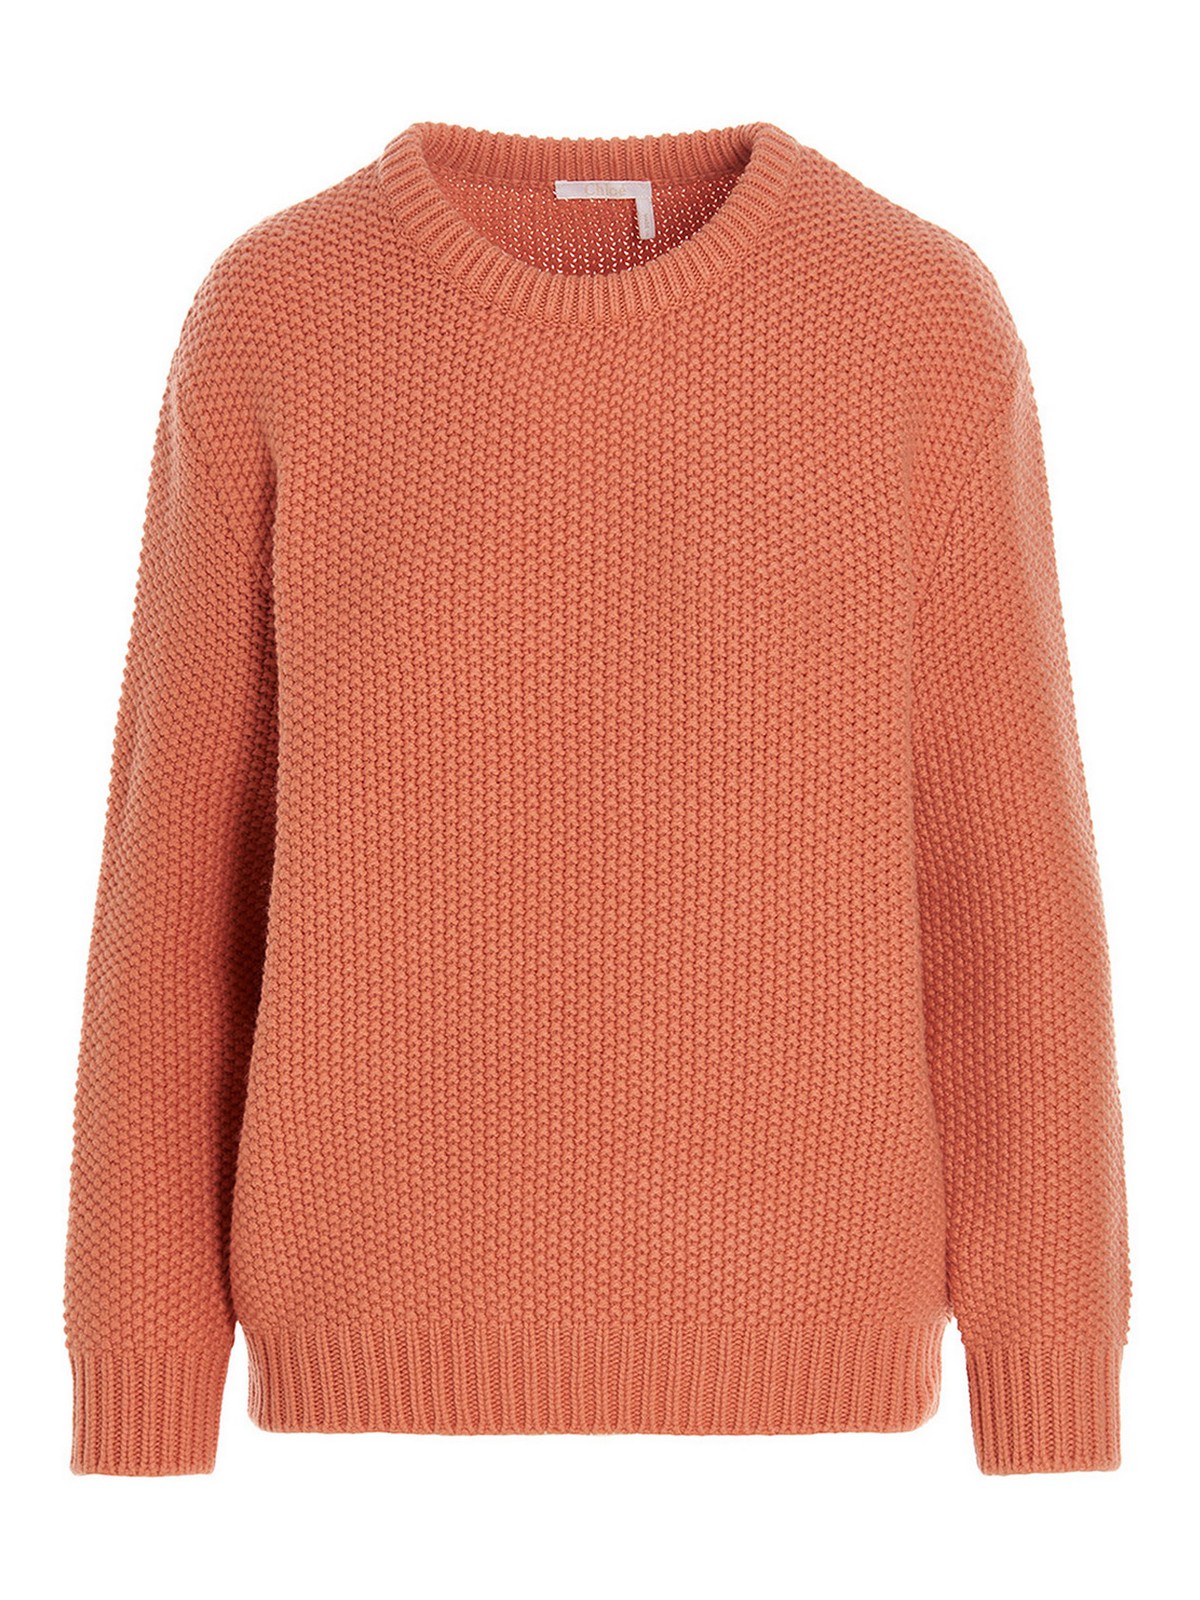 Chloé Textured Sweater In Orange